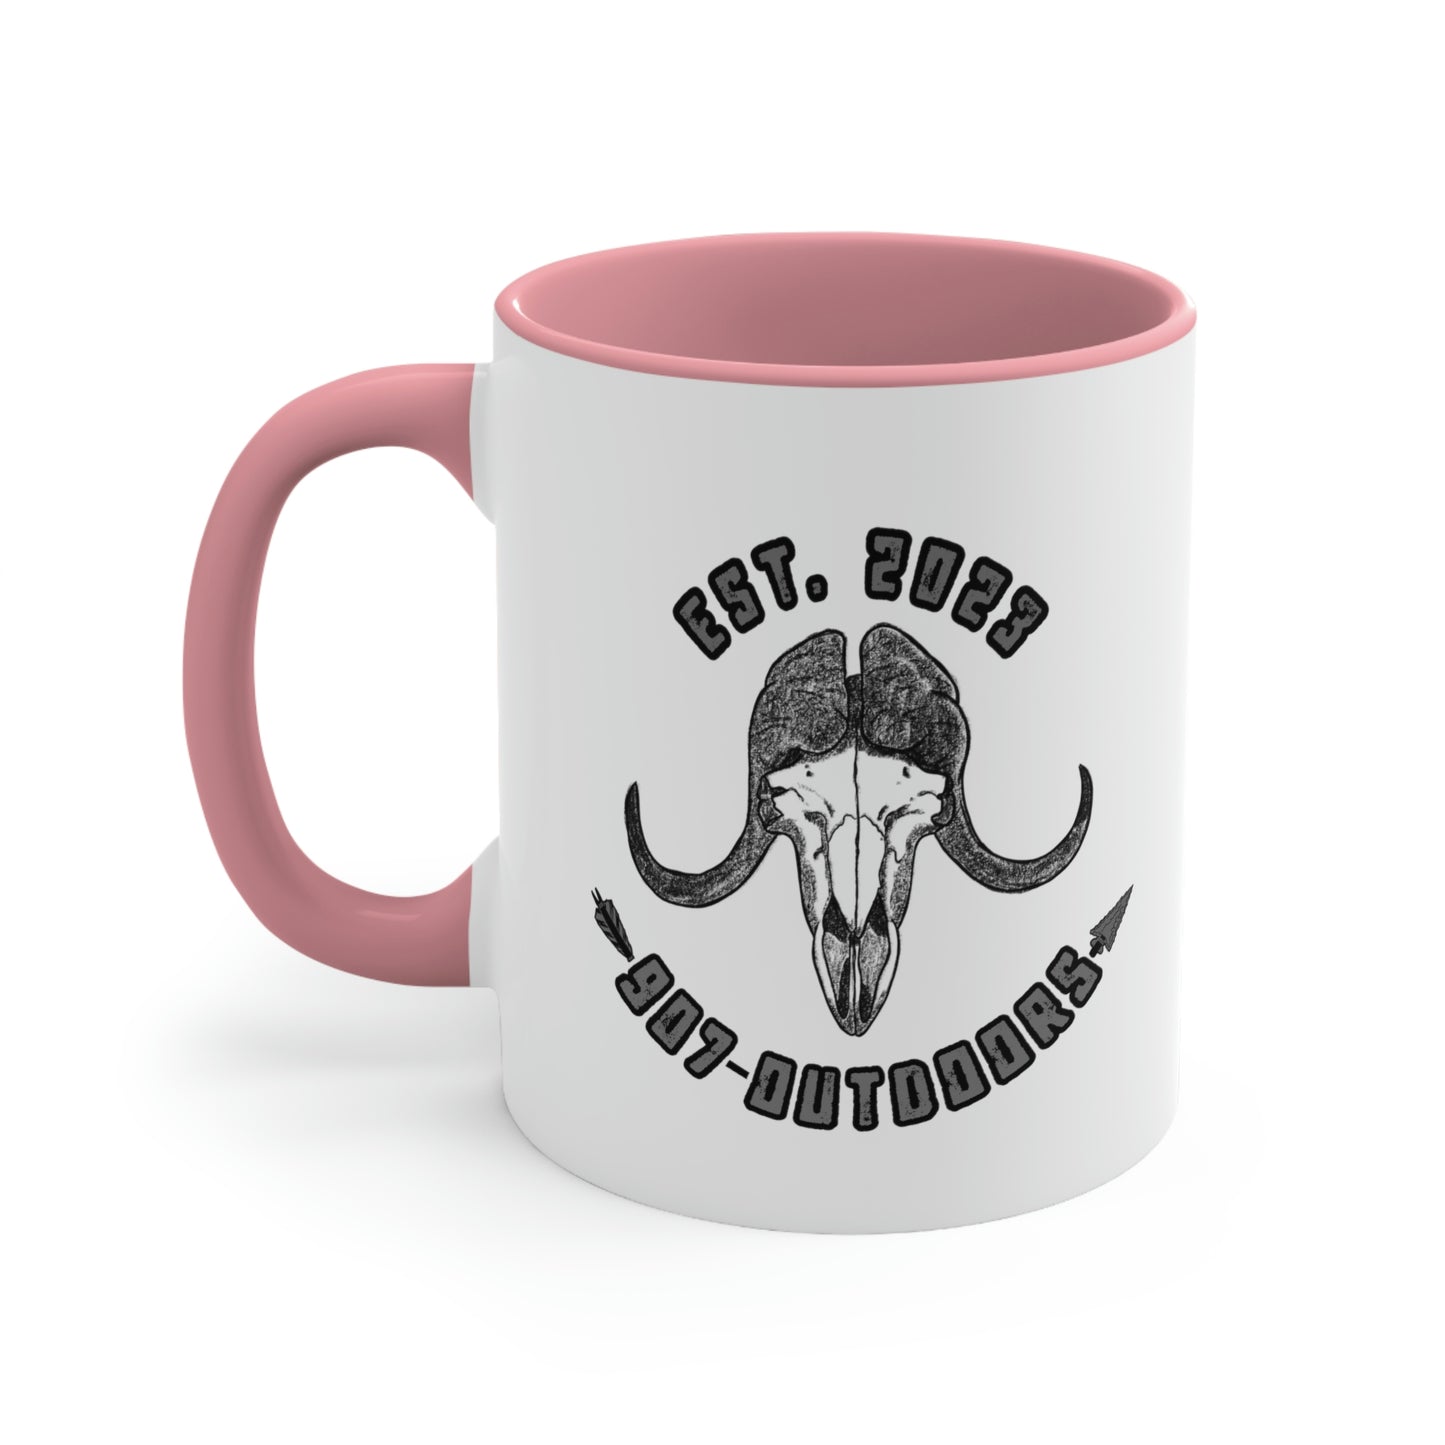 Musk ox Accent Coffee Mug, 11oz - 907Outdoors